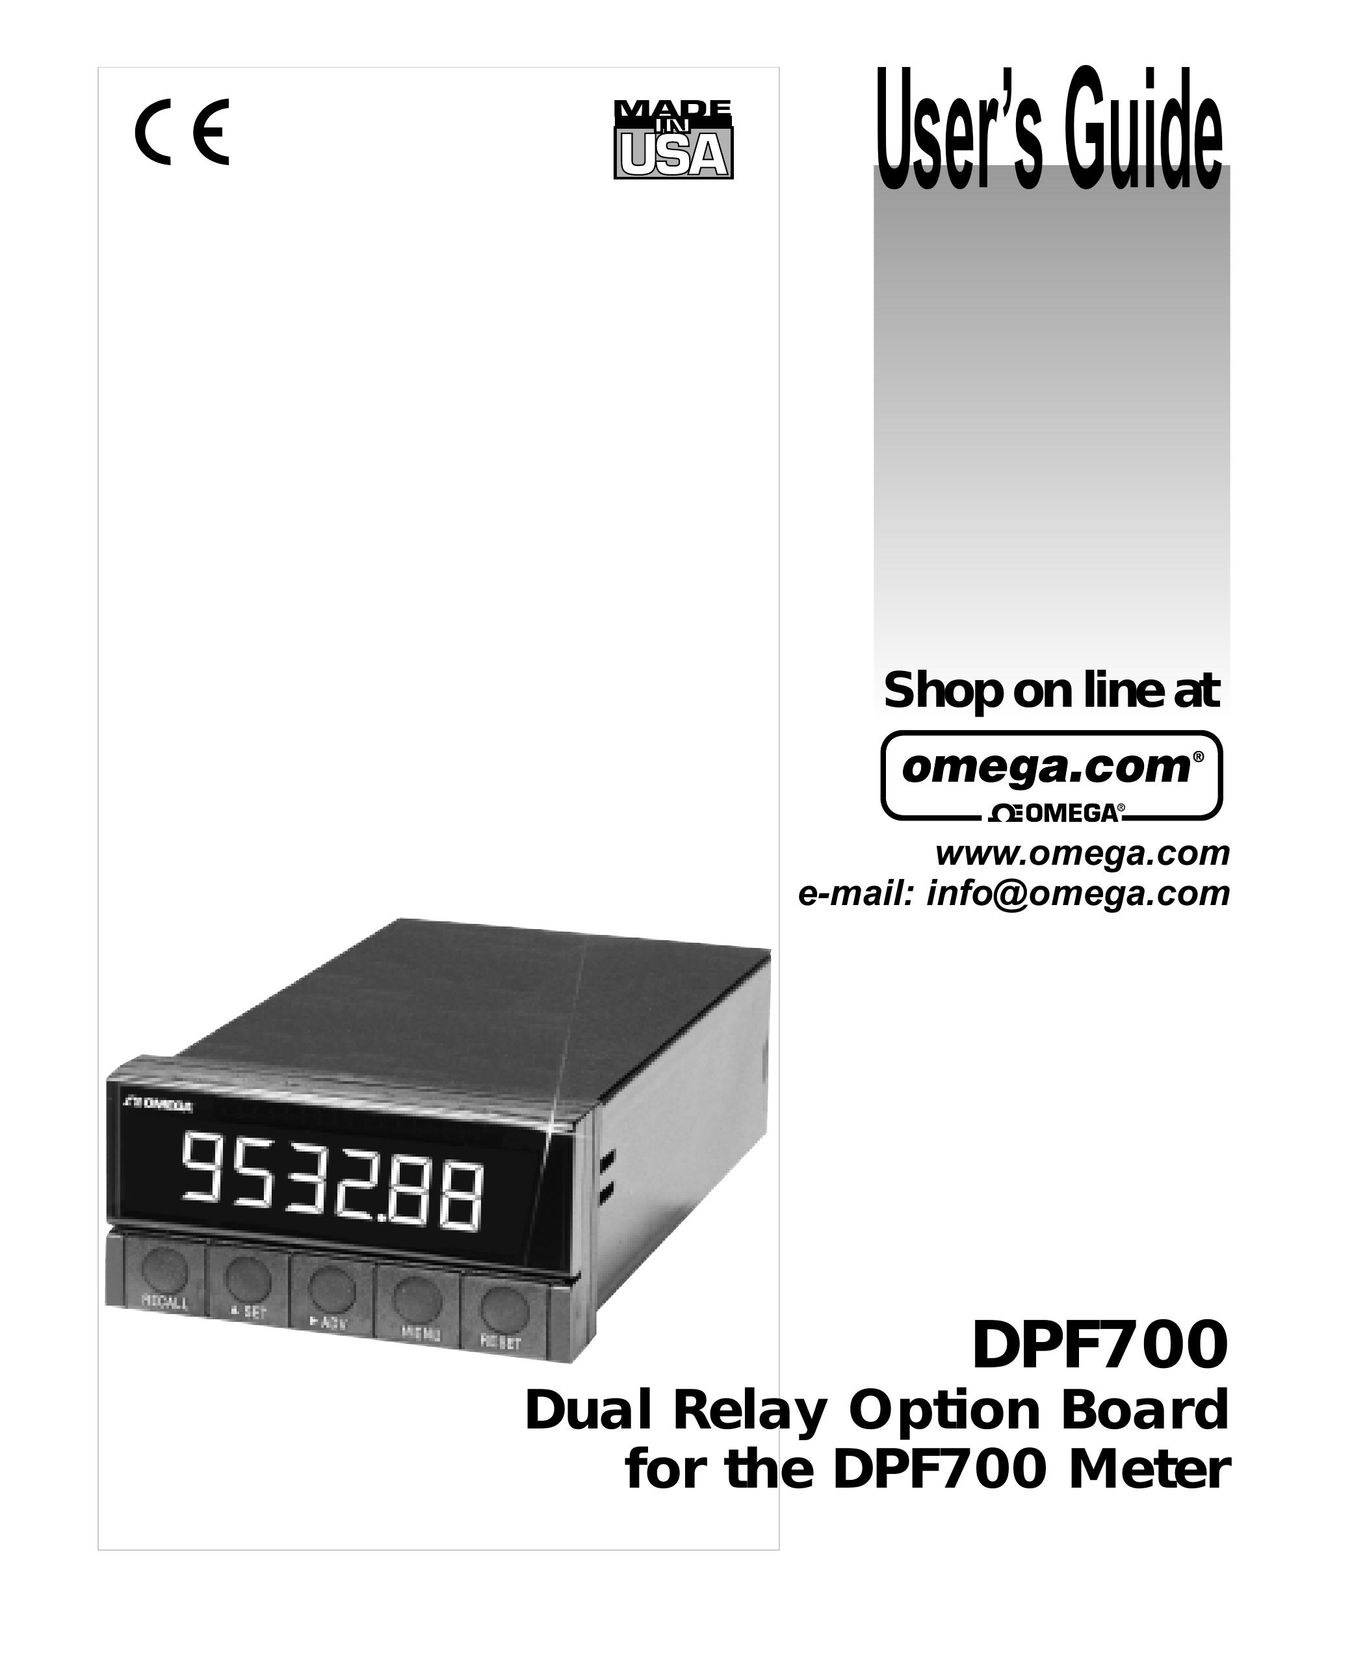 Omega Speaker Systems DPF700 Network Router User Manual